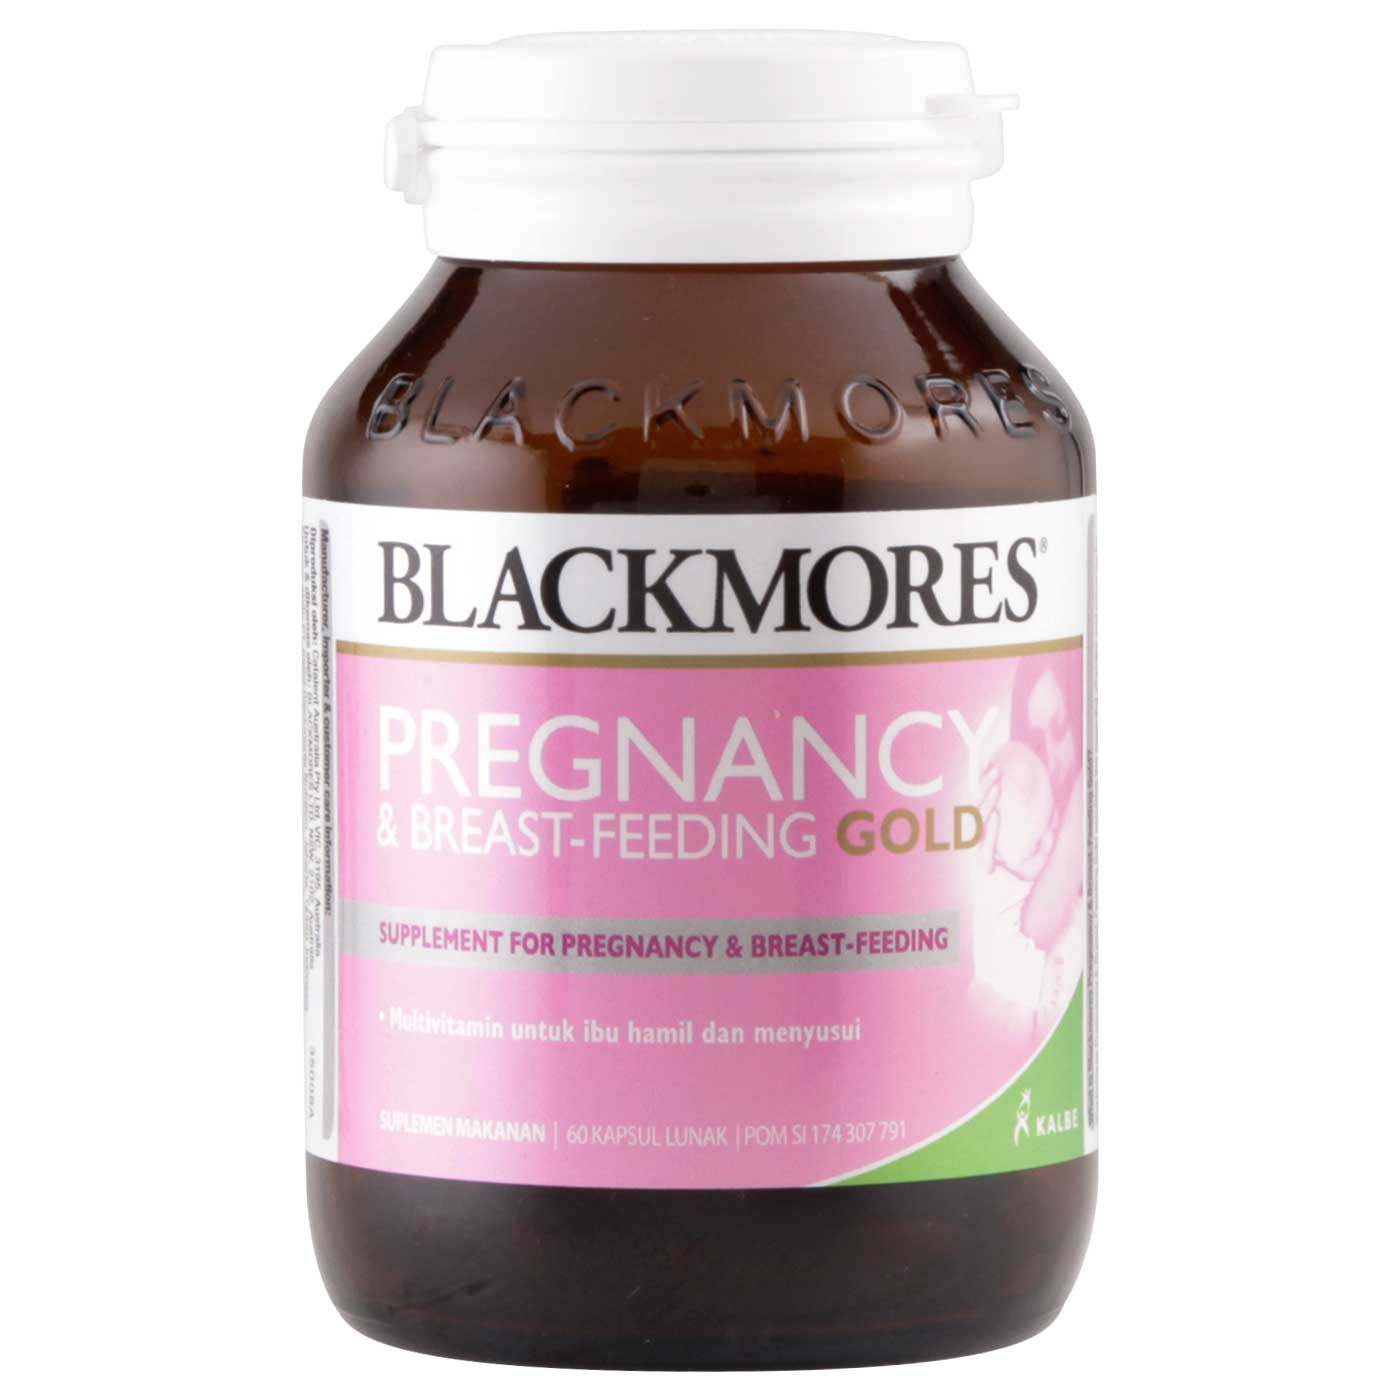 Blackmores Pregnancy & Breast-Feeding Gold (60 Tablet) - 1